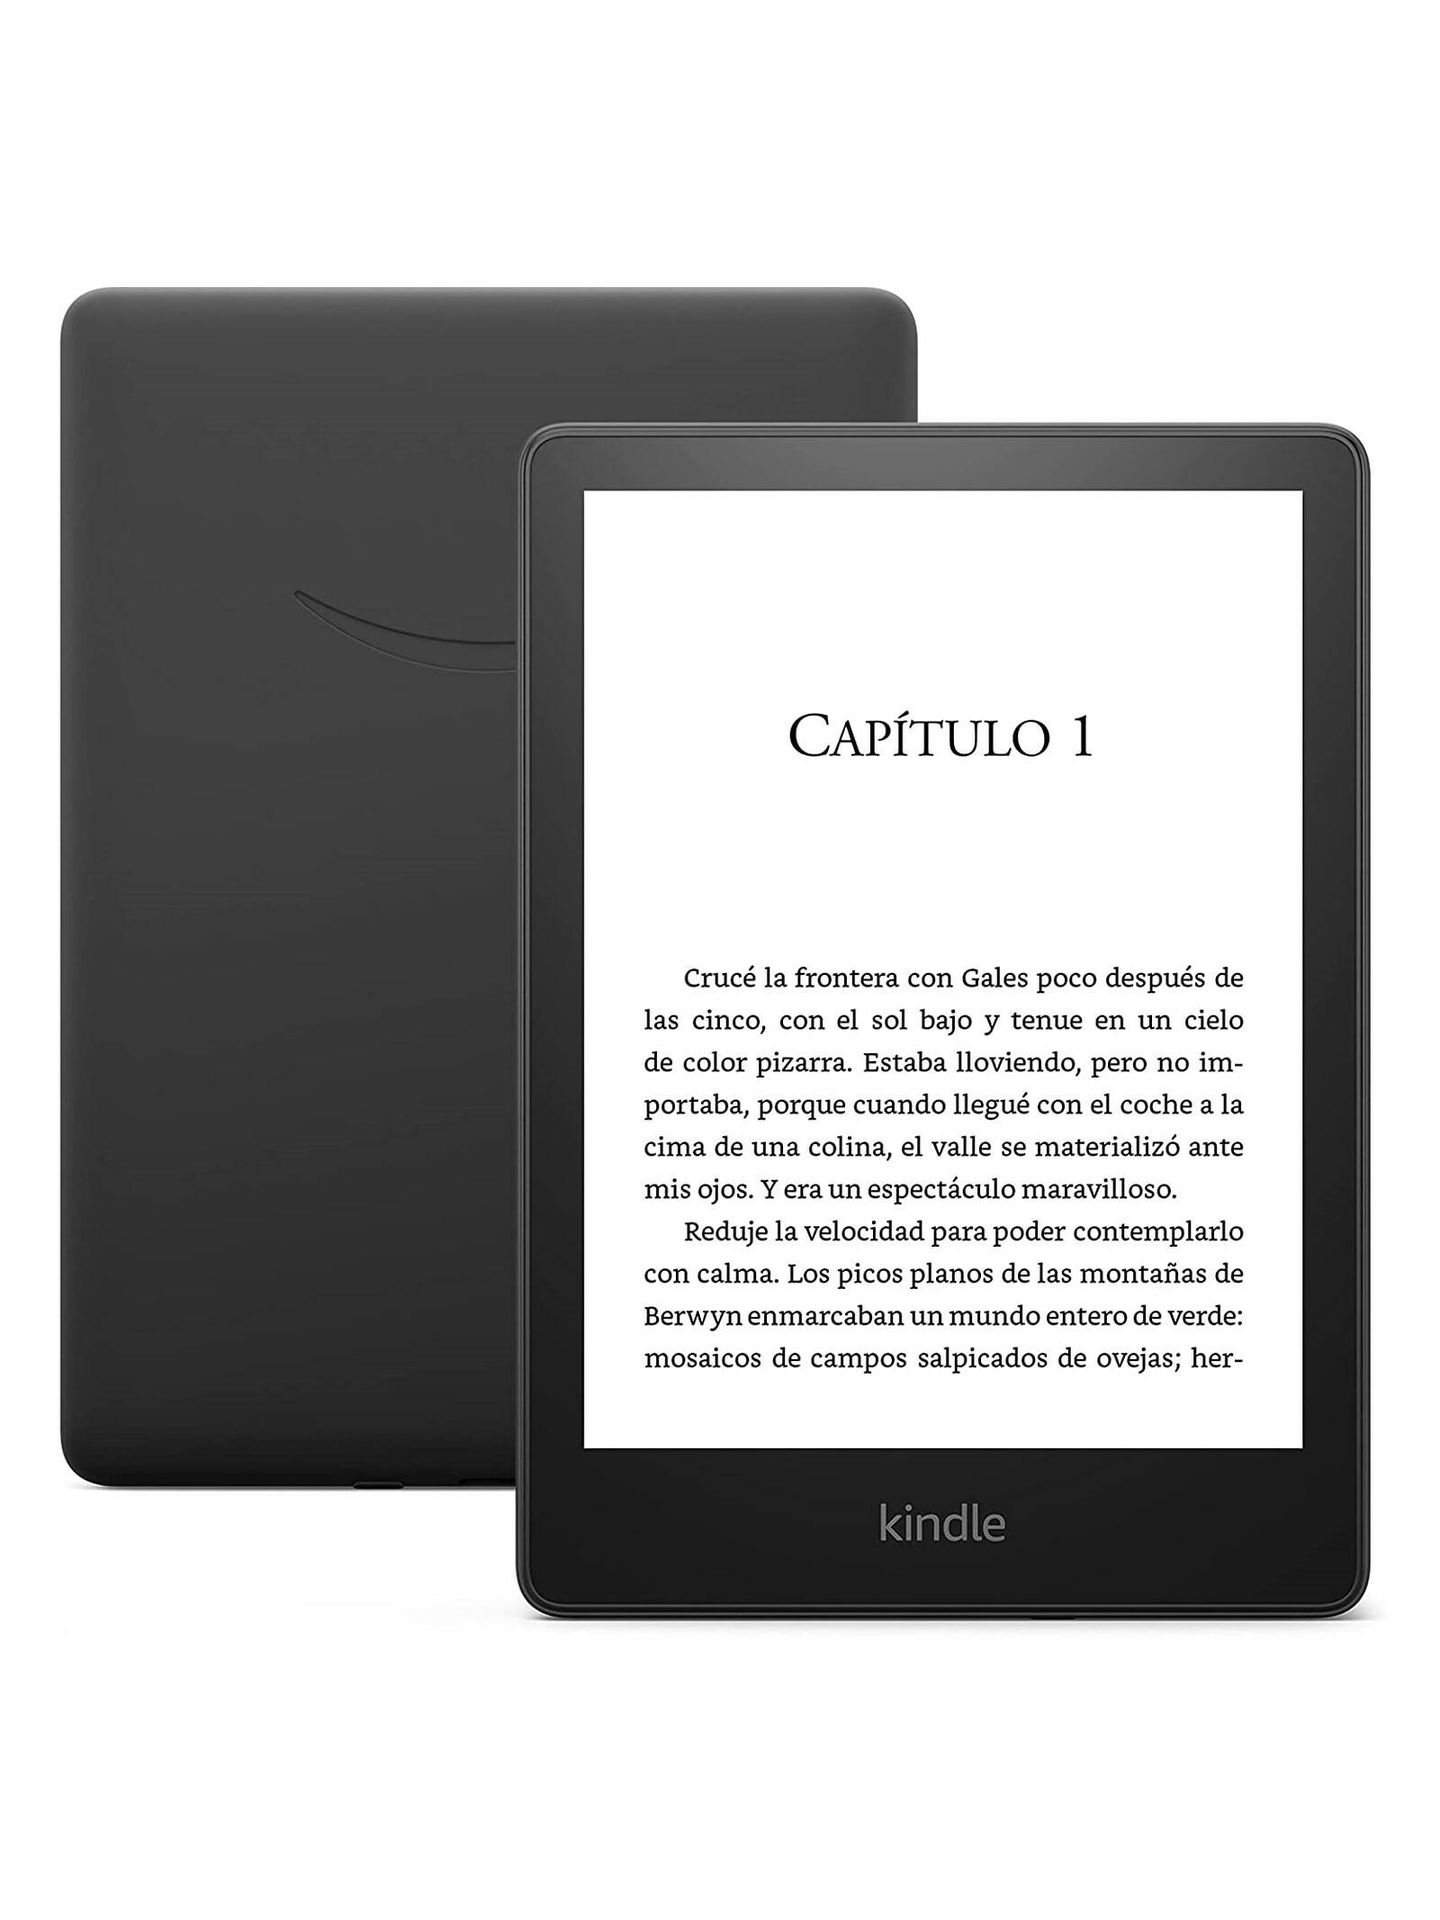 Kindle Paperwhite. (Amazon)